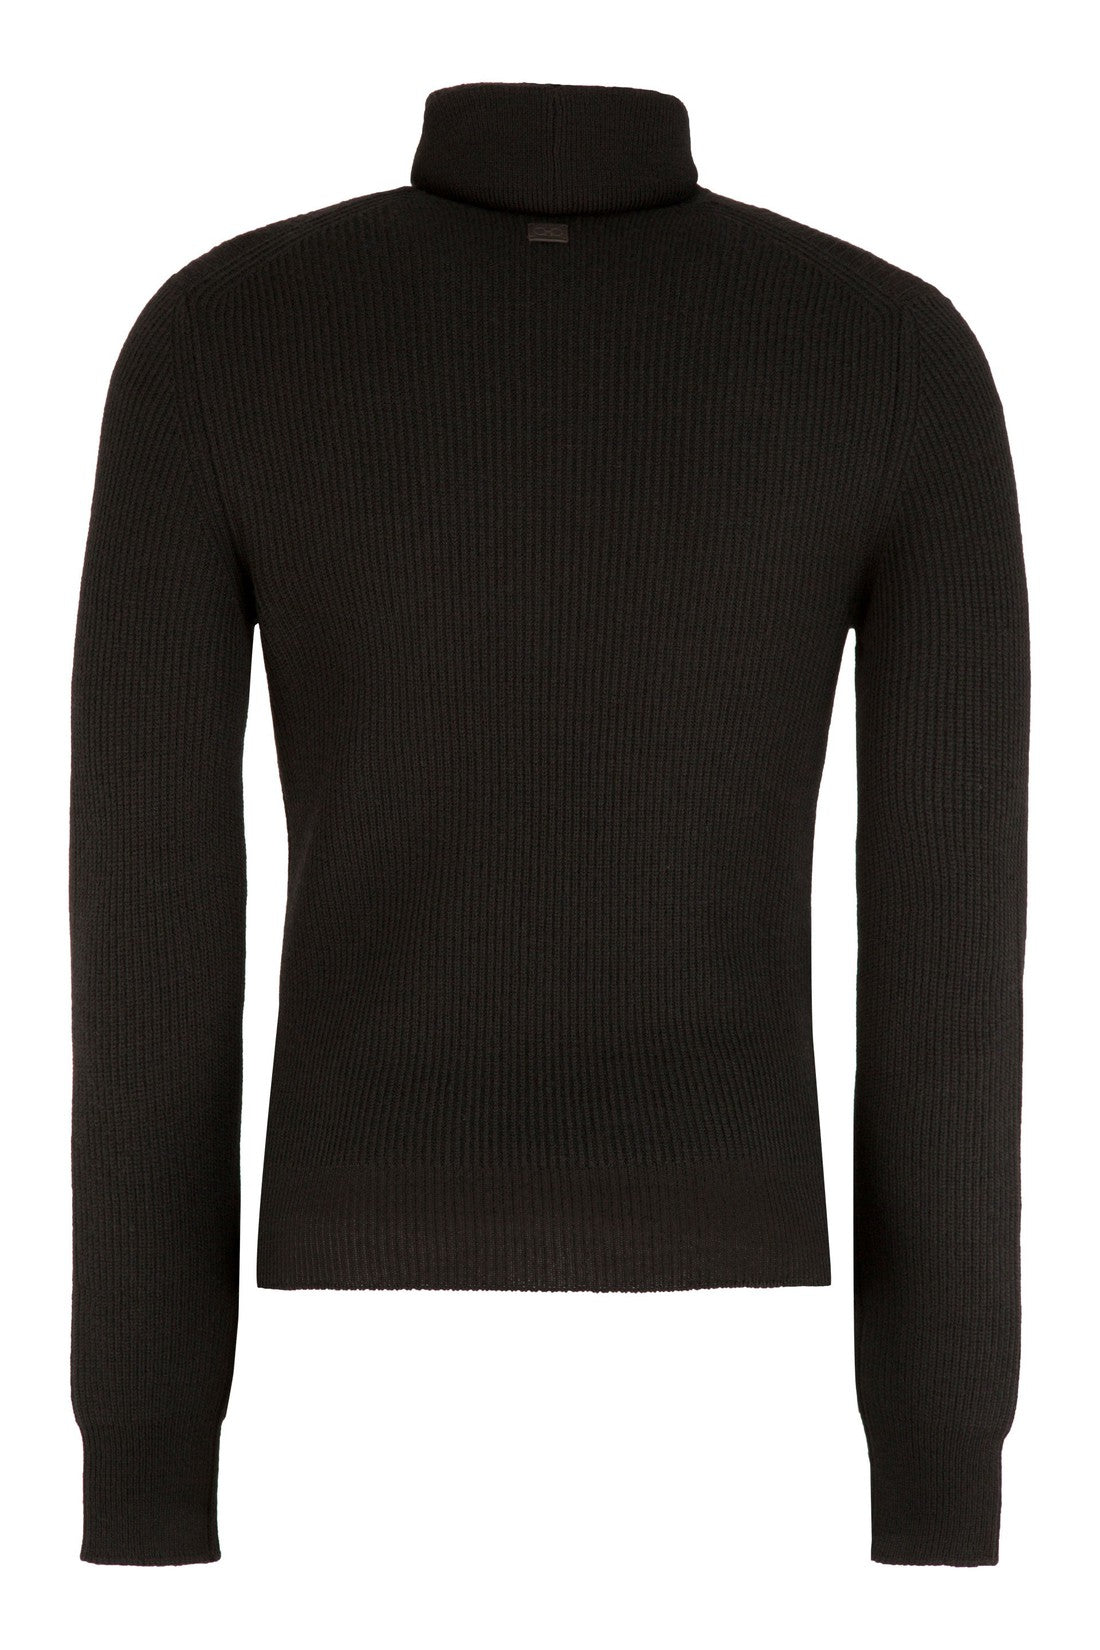 FERRAGAMO-OUTLET-SALE-Wool turtleneck sweater-ARCHIVIST